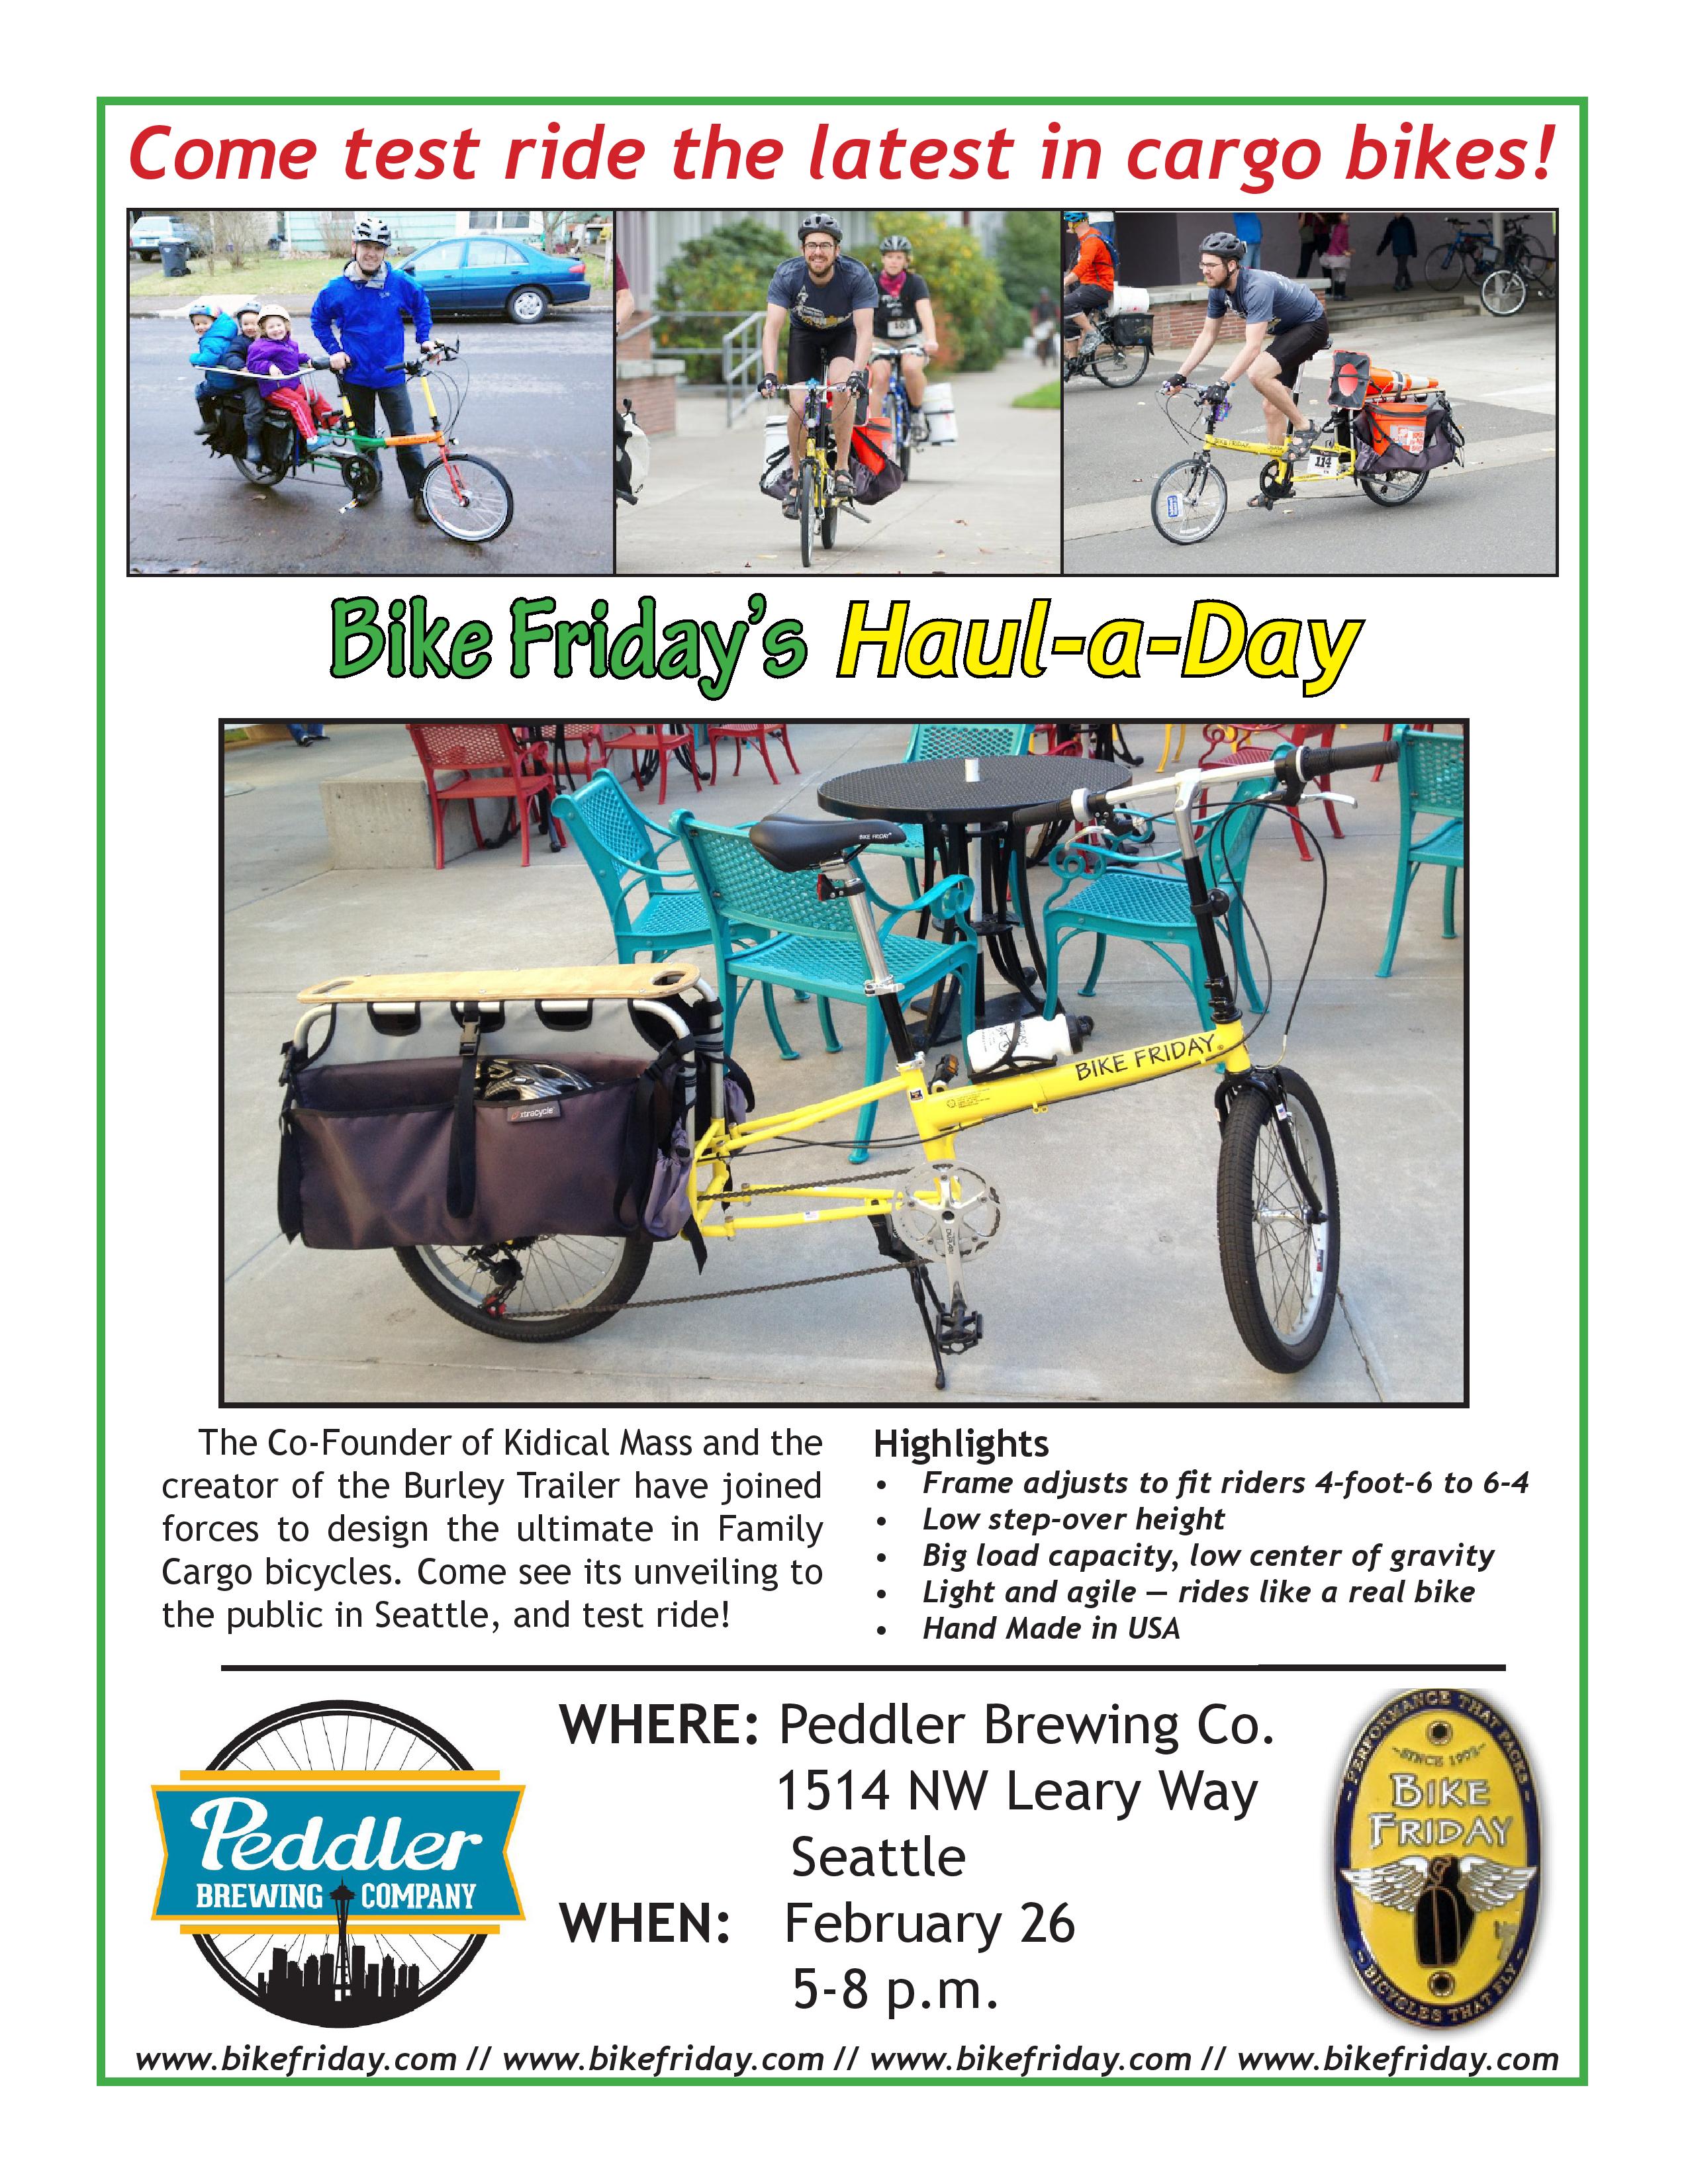 Test ride Bike Friday’s Haul-A-Day cargo bike | Seattle Bike Blog